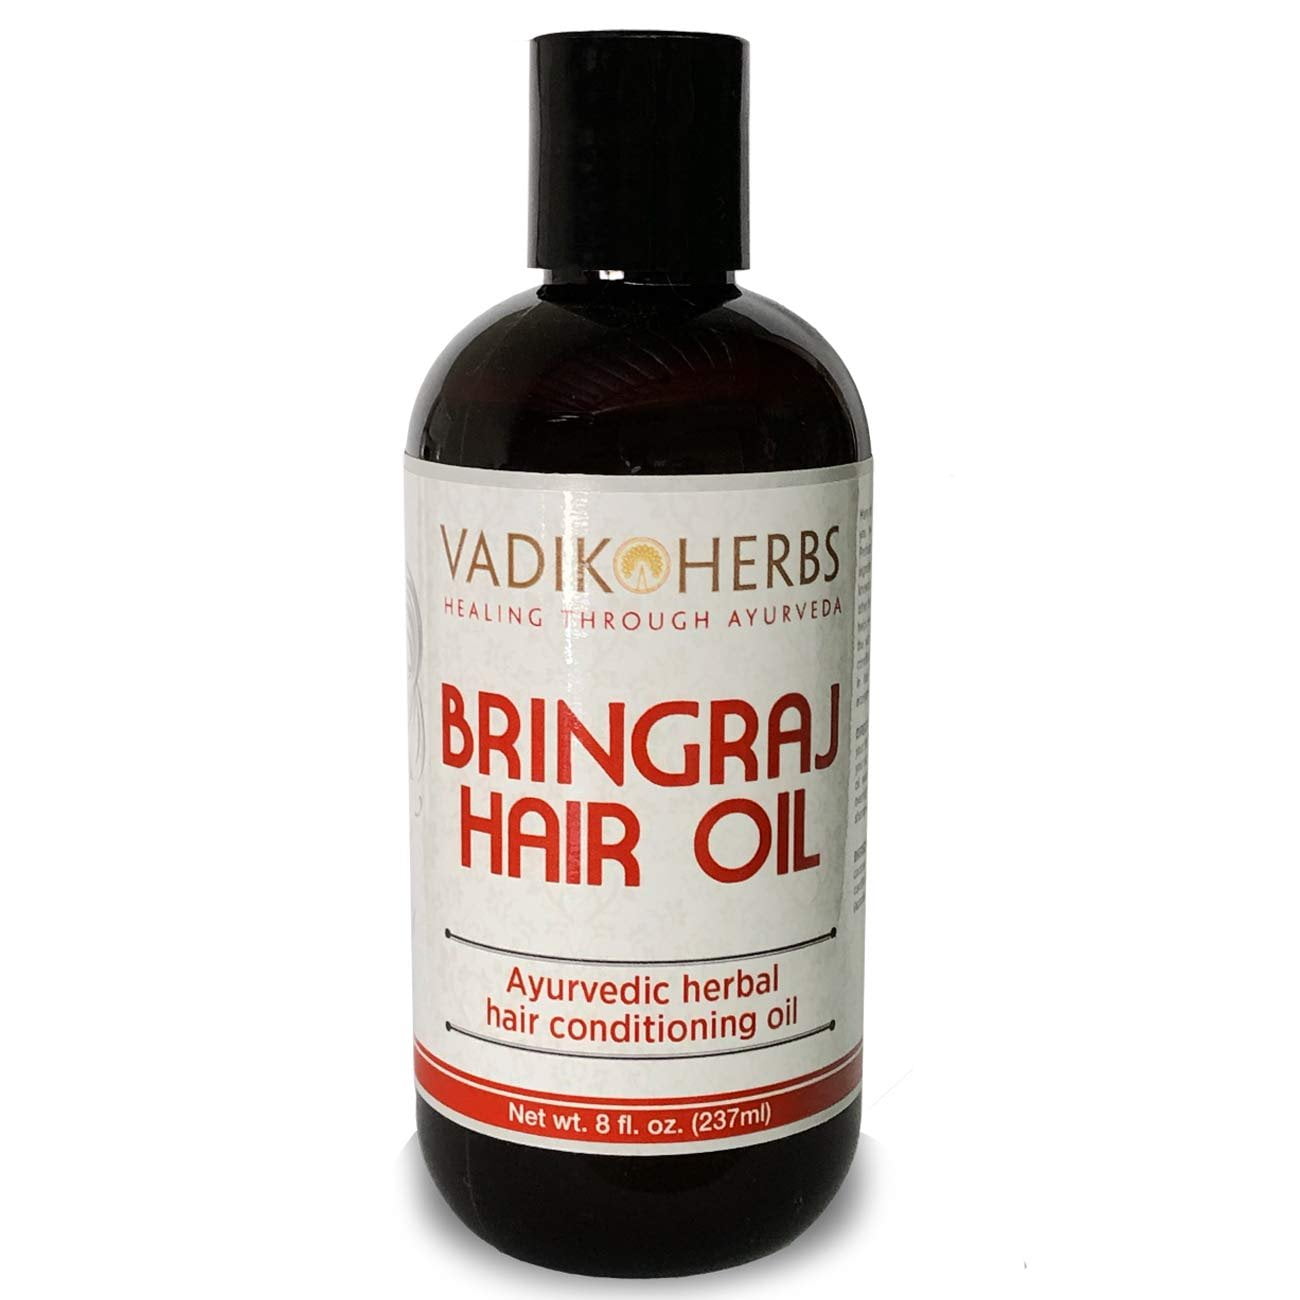 Bringraj (Bhringraj) Hair Oil (8 oz) by Vadik Herbs | Herbal hair growth  oil and hair conditioning oil | Great for hair loss, balding, thinning of  hair, for beard growth, herbal scalp